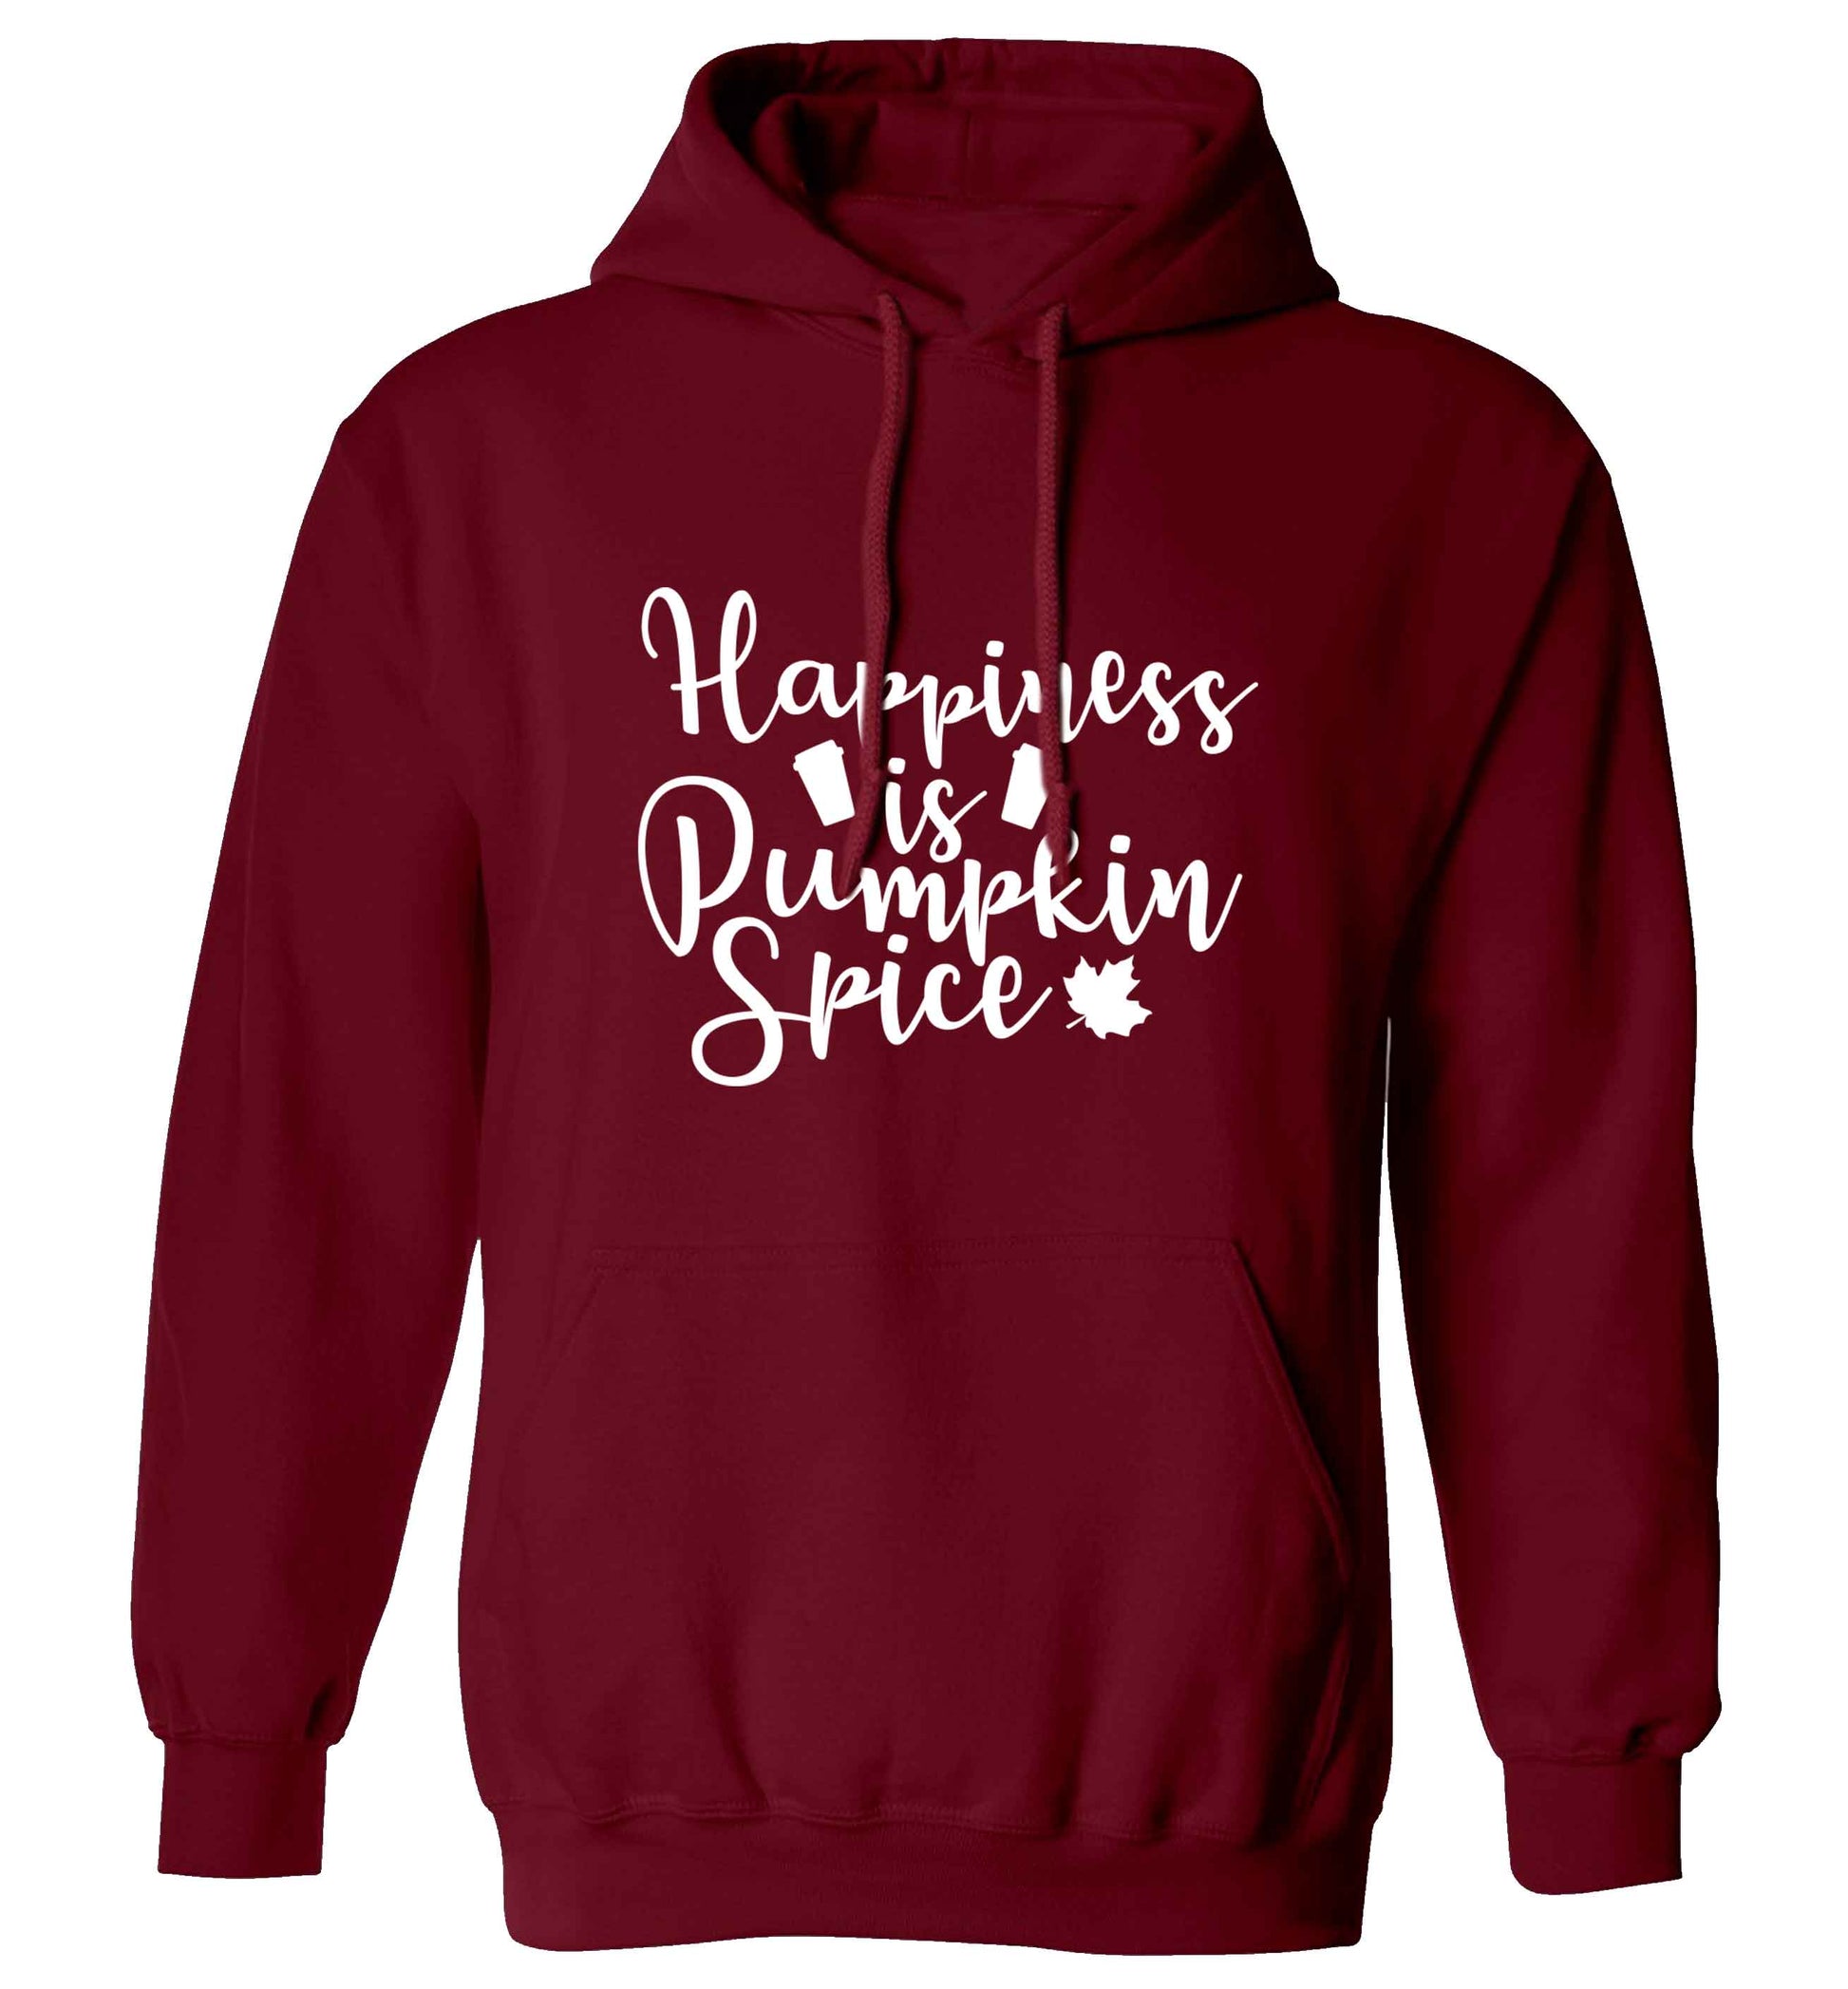 Happiness Pumpkin Spice adults unisex maroon hoodie 2XL